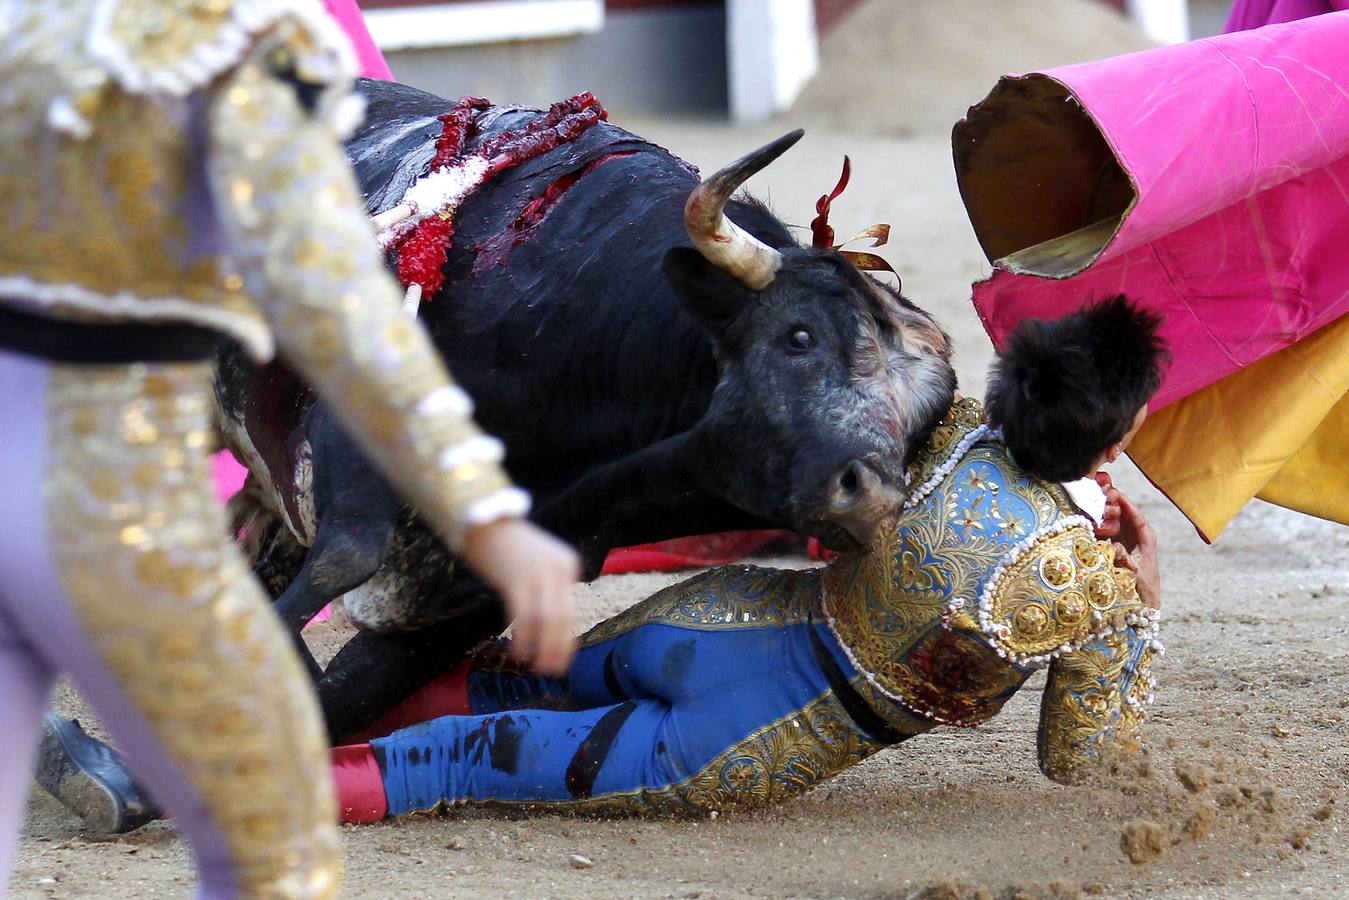 Bullfighting fall 63% in Spain since 2007